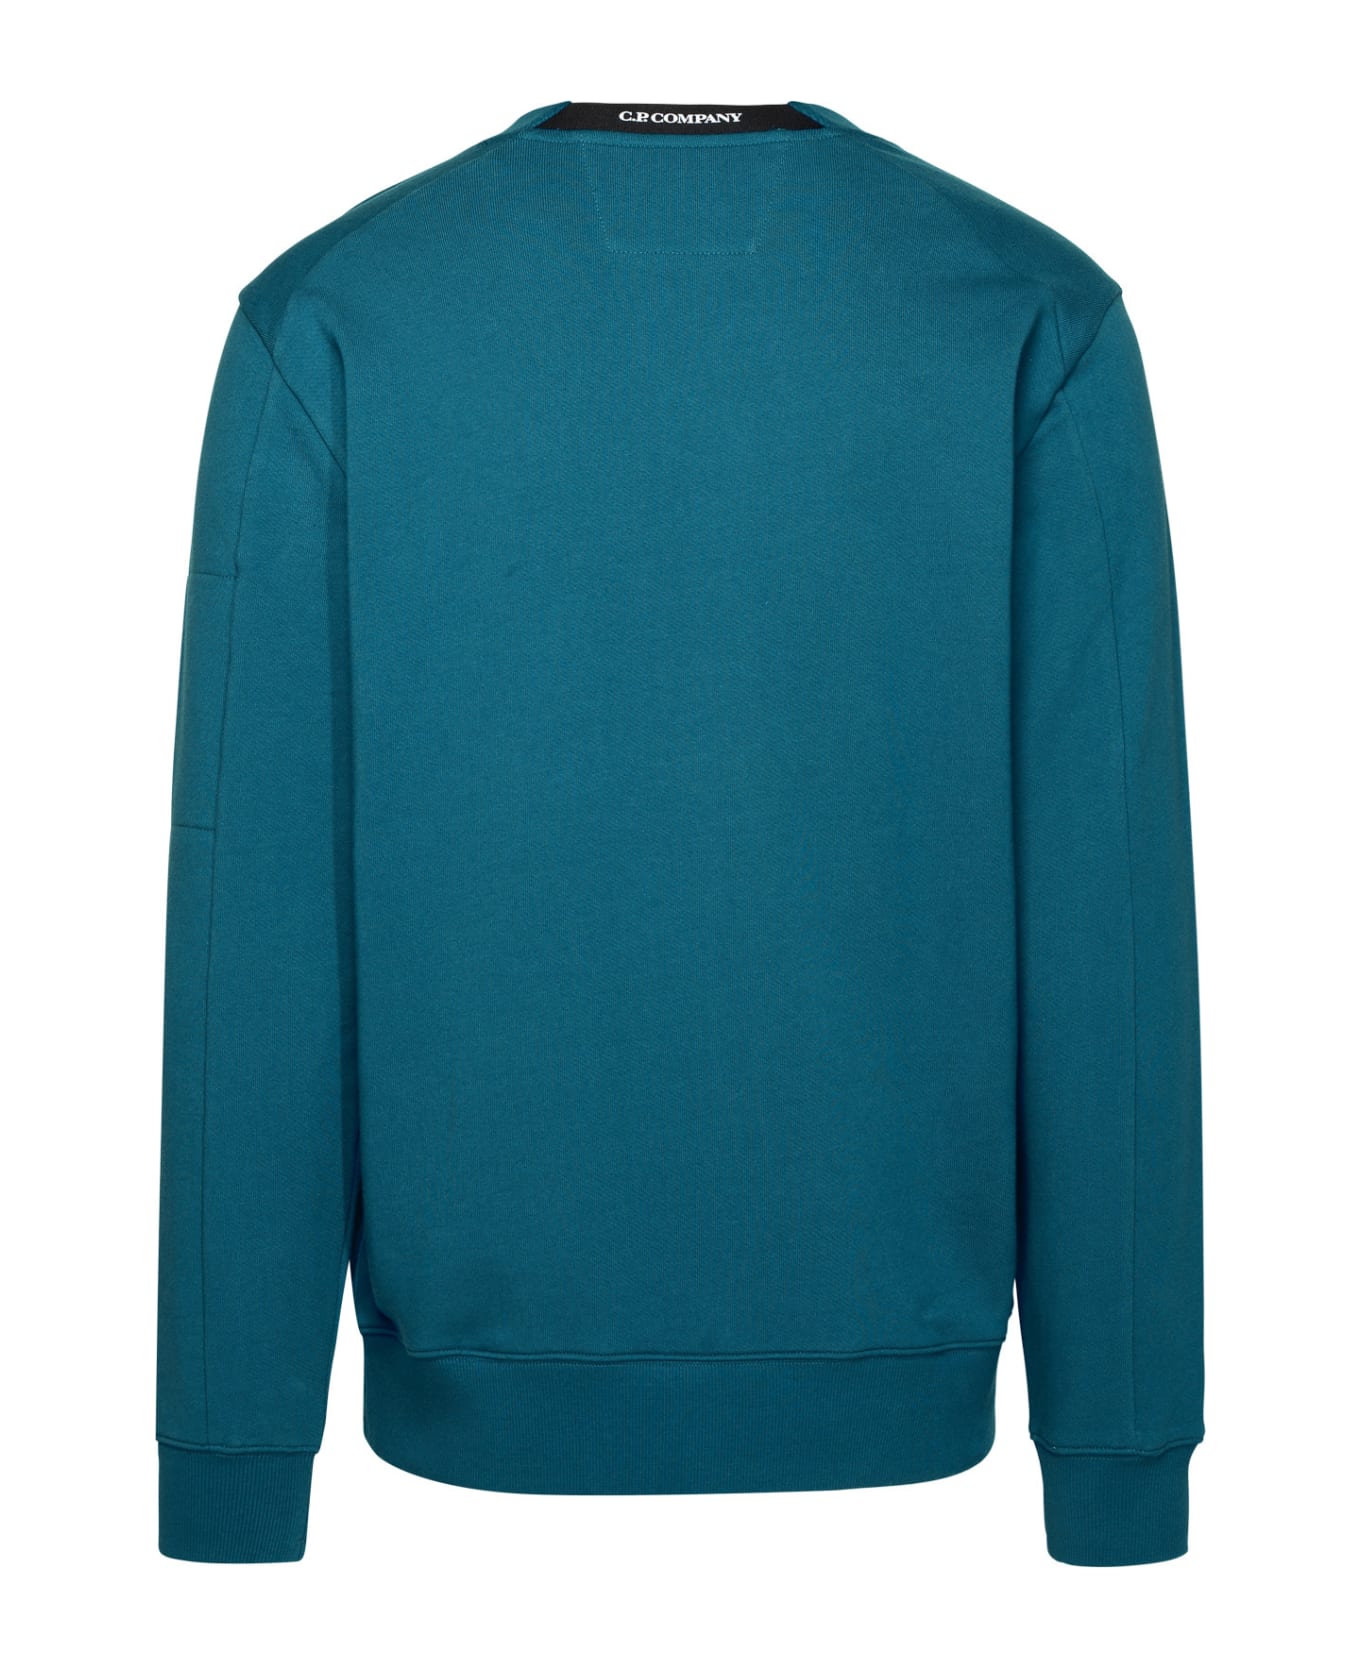 C.P. Company 'diagonal Raised Fleece' Blue Cotton Sweatshirt - Blue